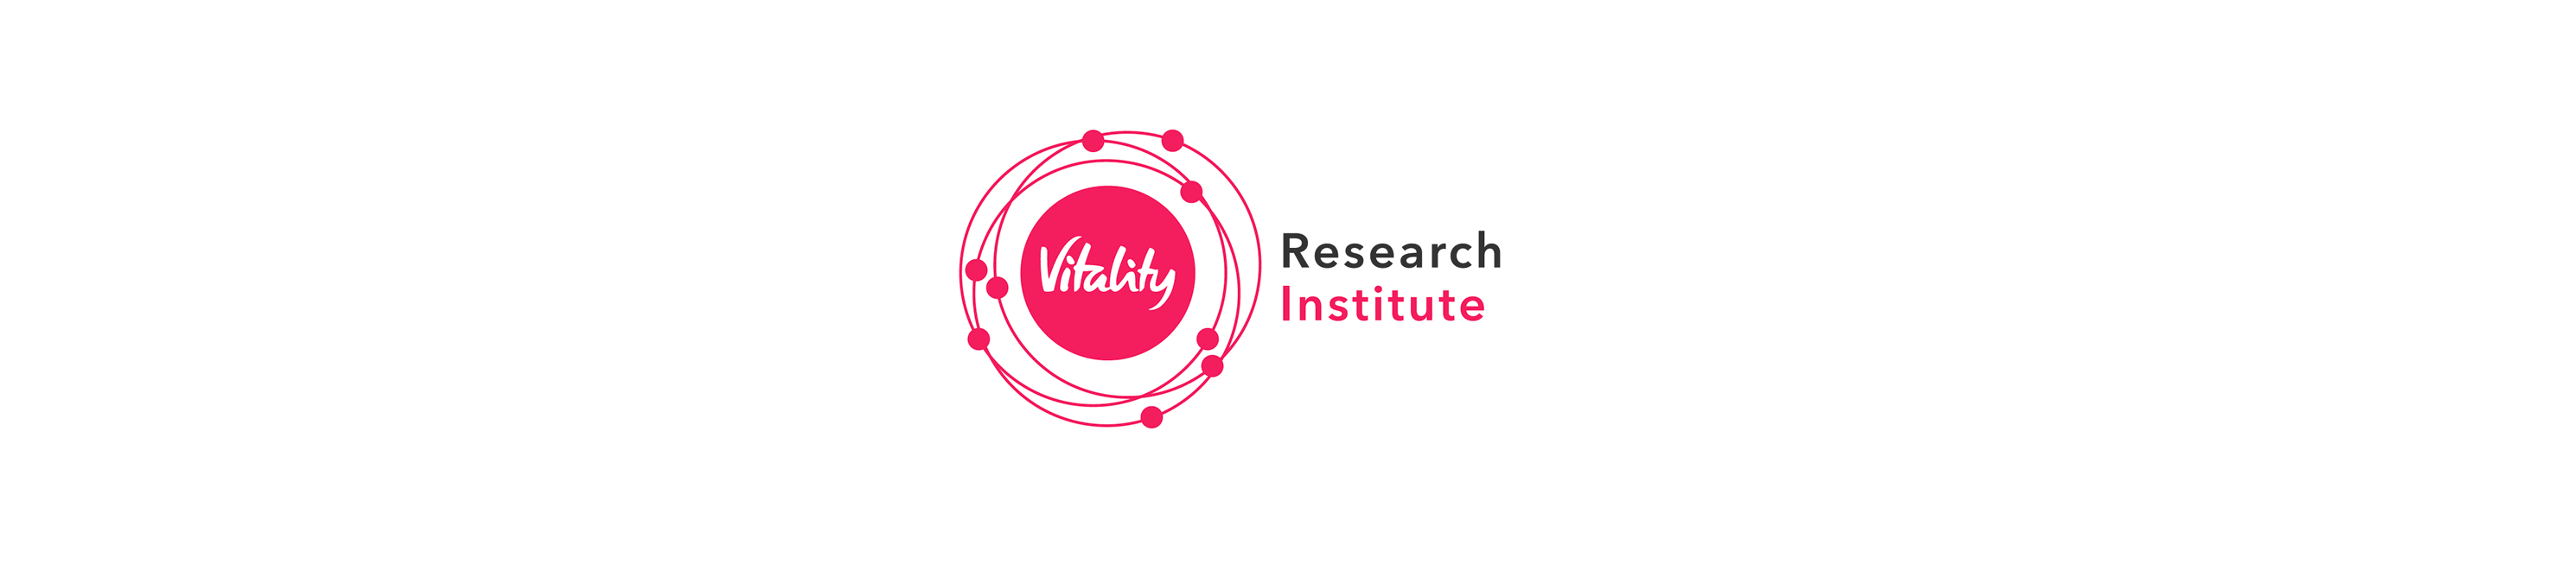 Vitality Research Institute logo - wide